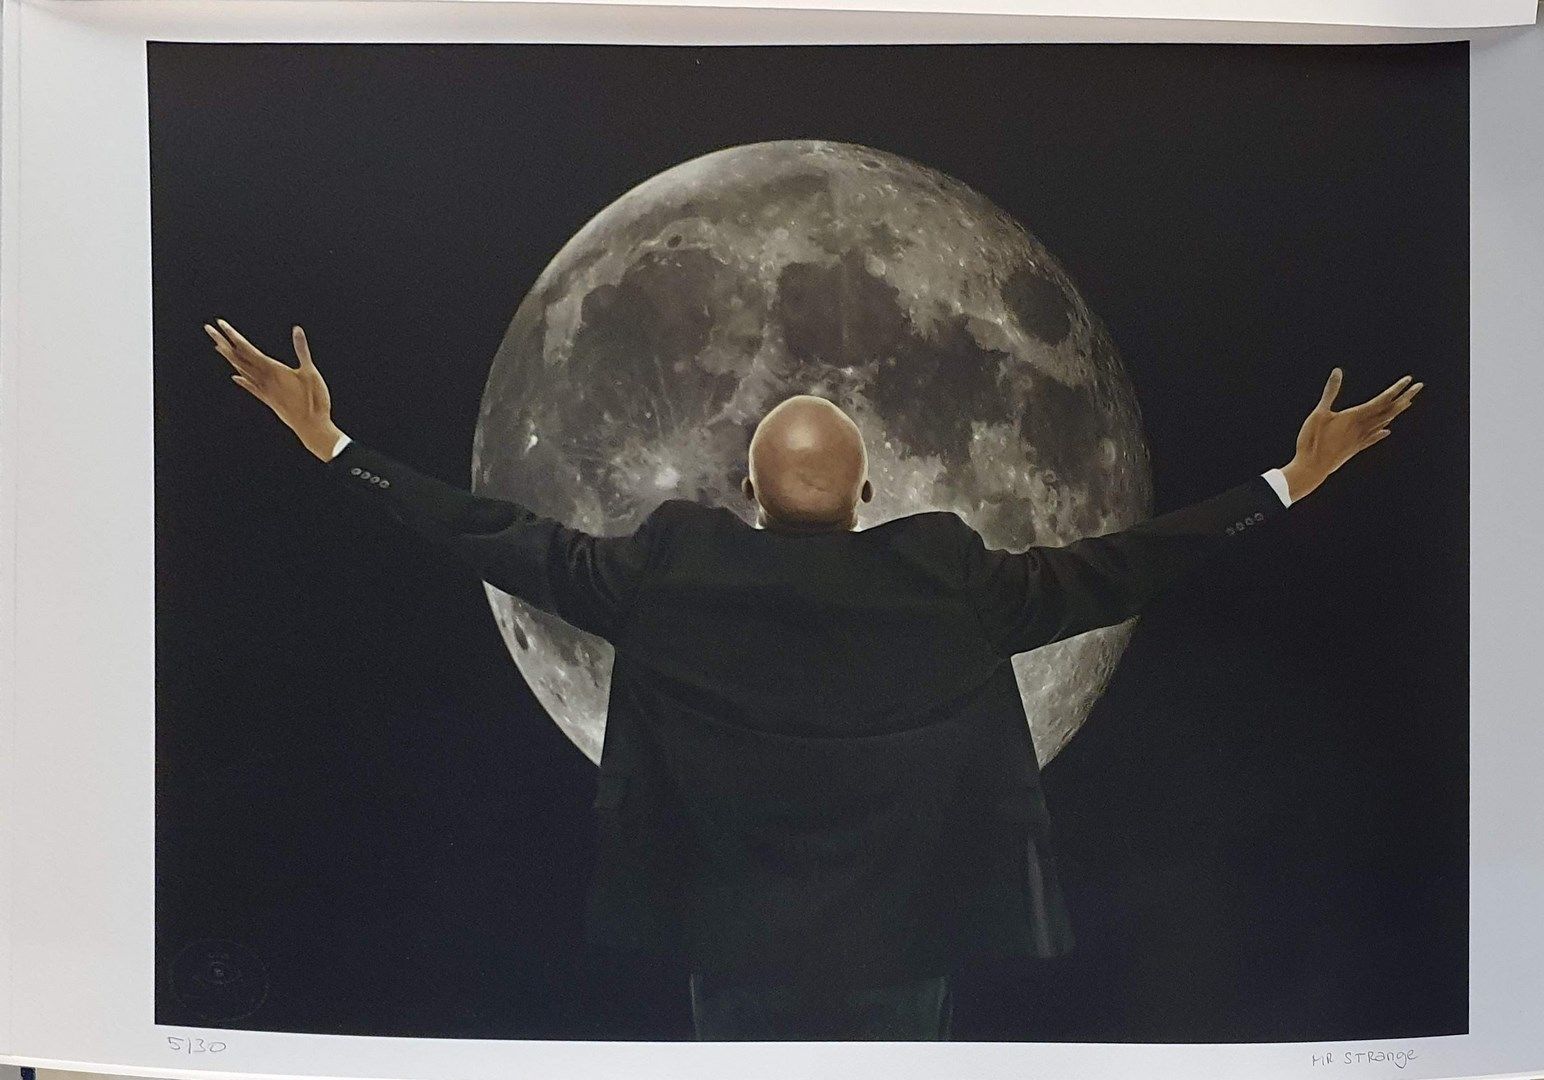 Null 奇异先生 (MR STRANGE) (生于1964年)

月球

丝网版画，编号5/30，右下角签名，左下角有艺术家的干印

50 x 70厘米